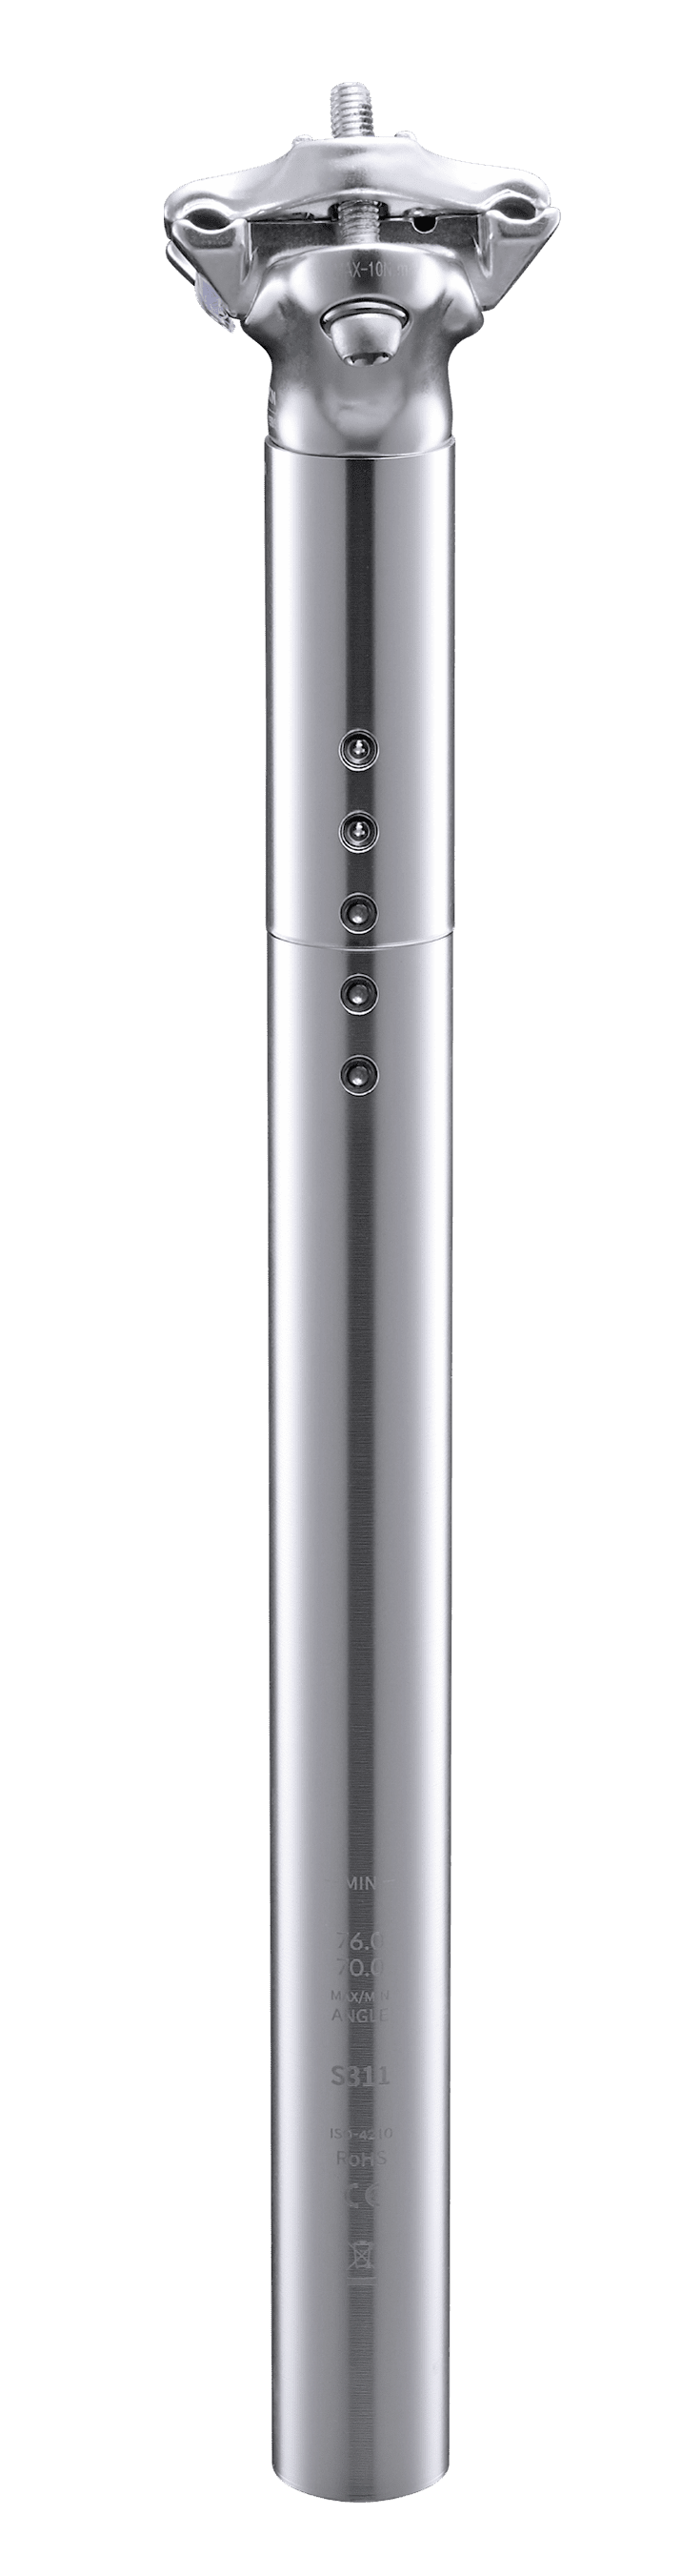 Sadelstolpe 27,2Mm Inbyggd belysning USB Silver